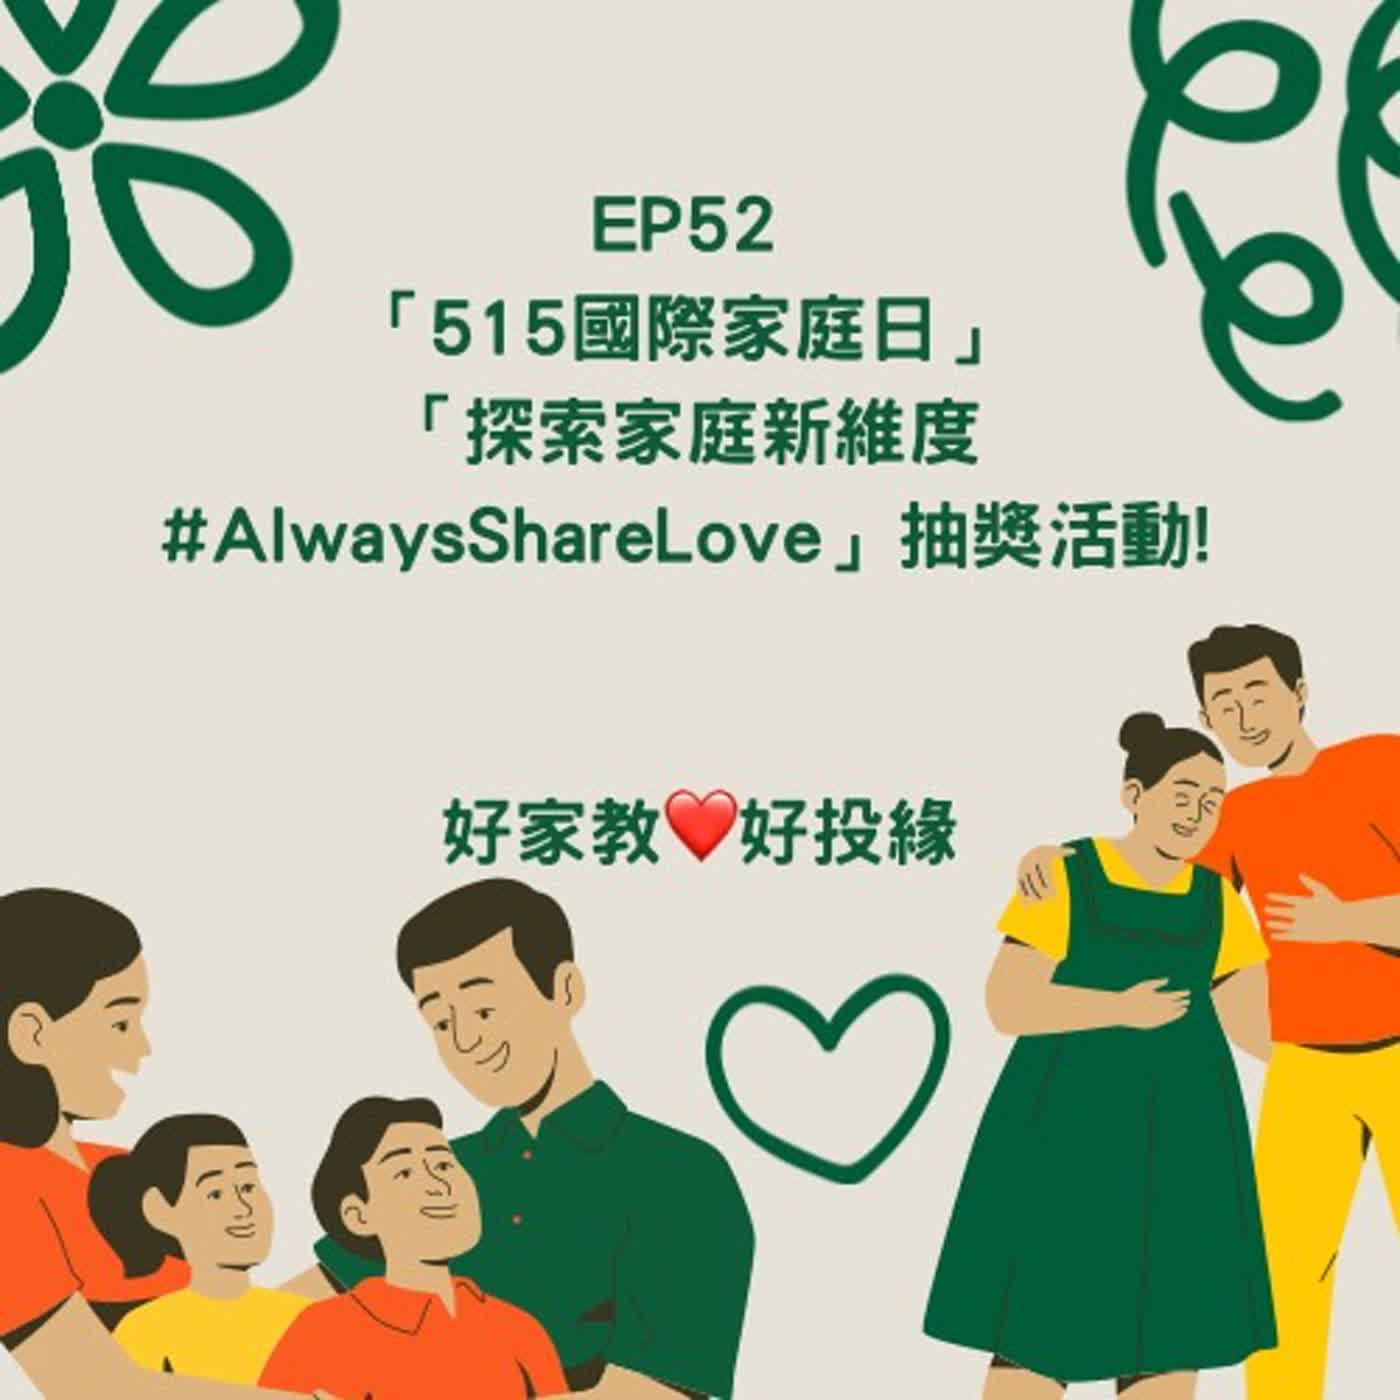 EP52:「515國際家庭日｣~「探索家庭新維度#AlwaysShareLove」抽獎活動!